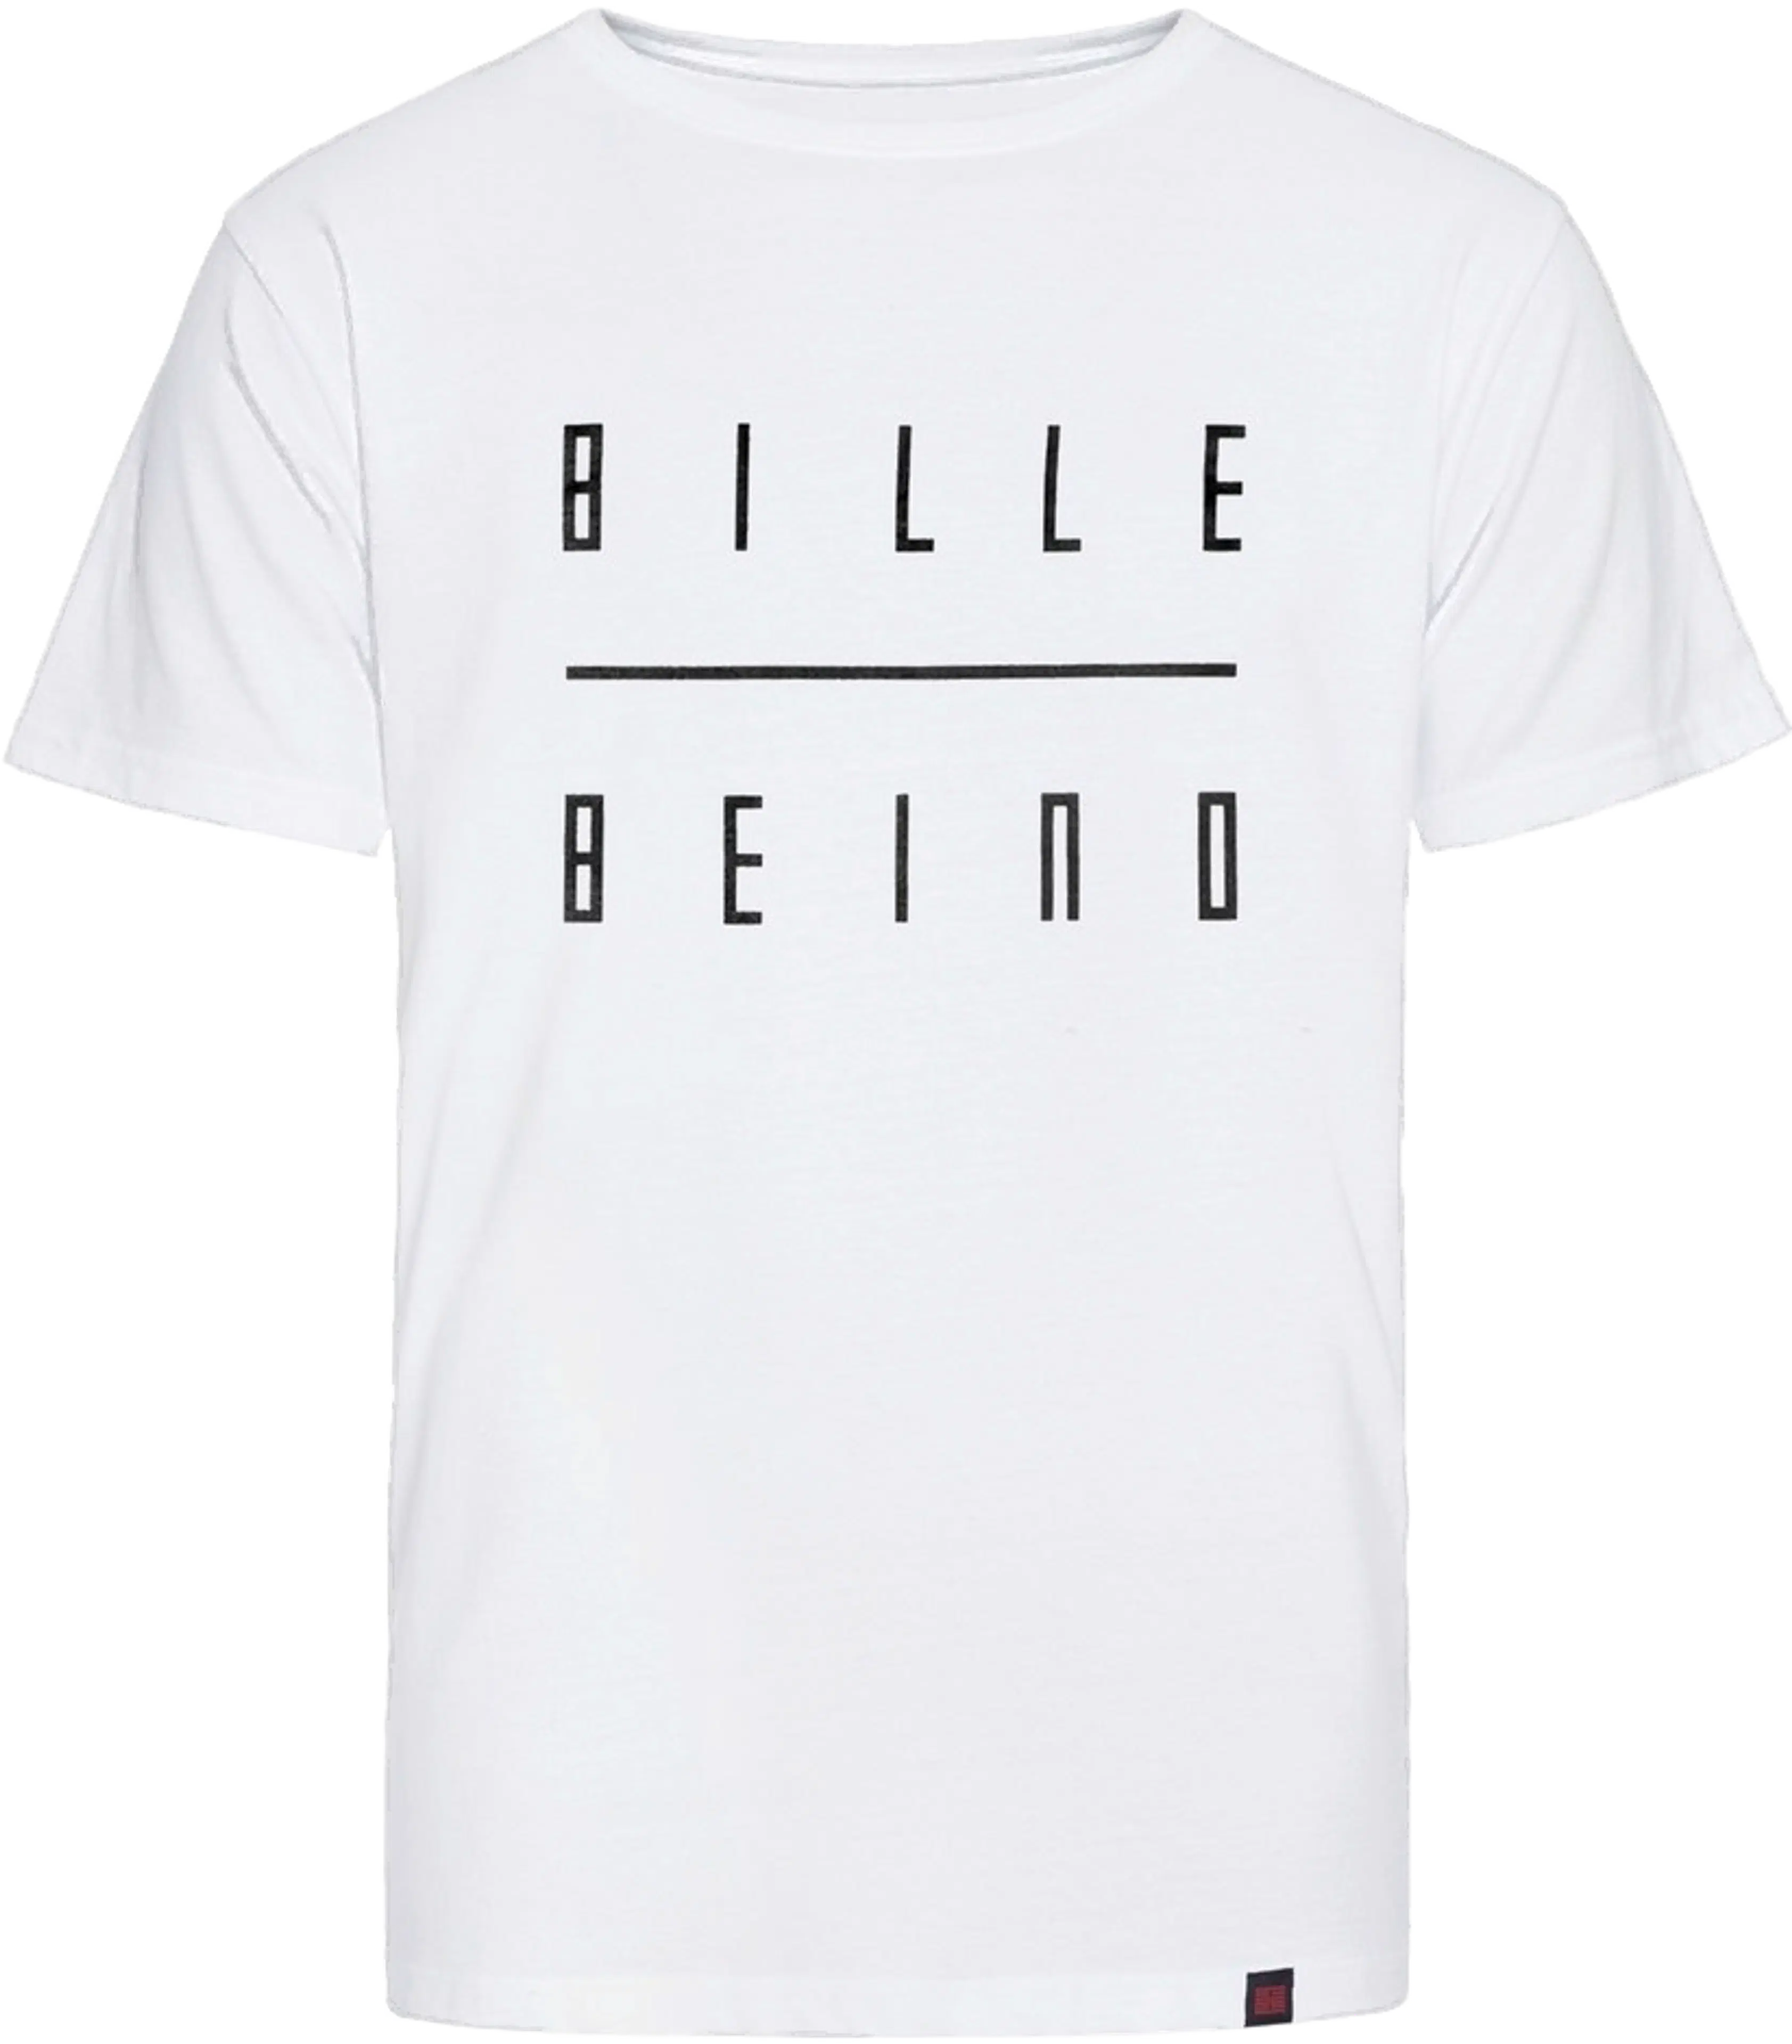 Billebeino Original Text t-paita